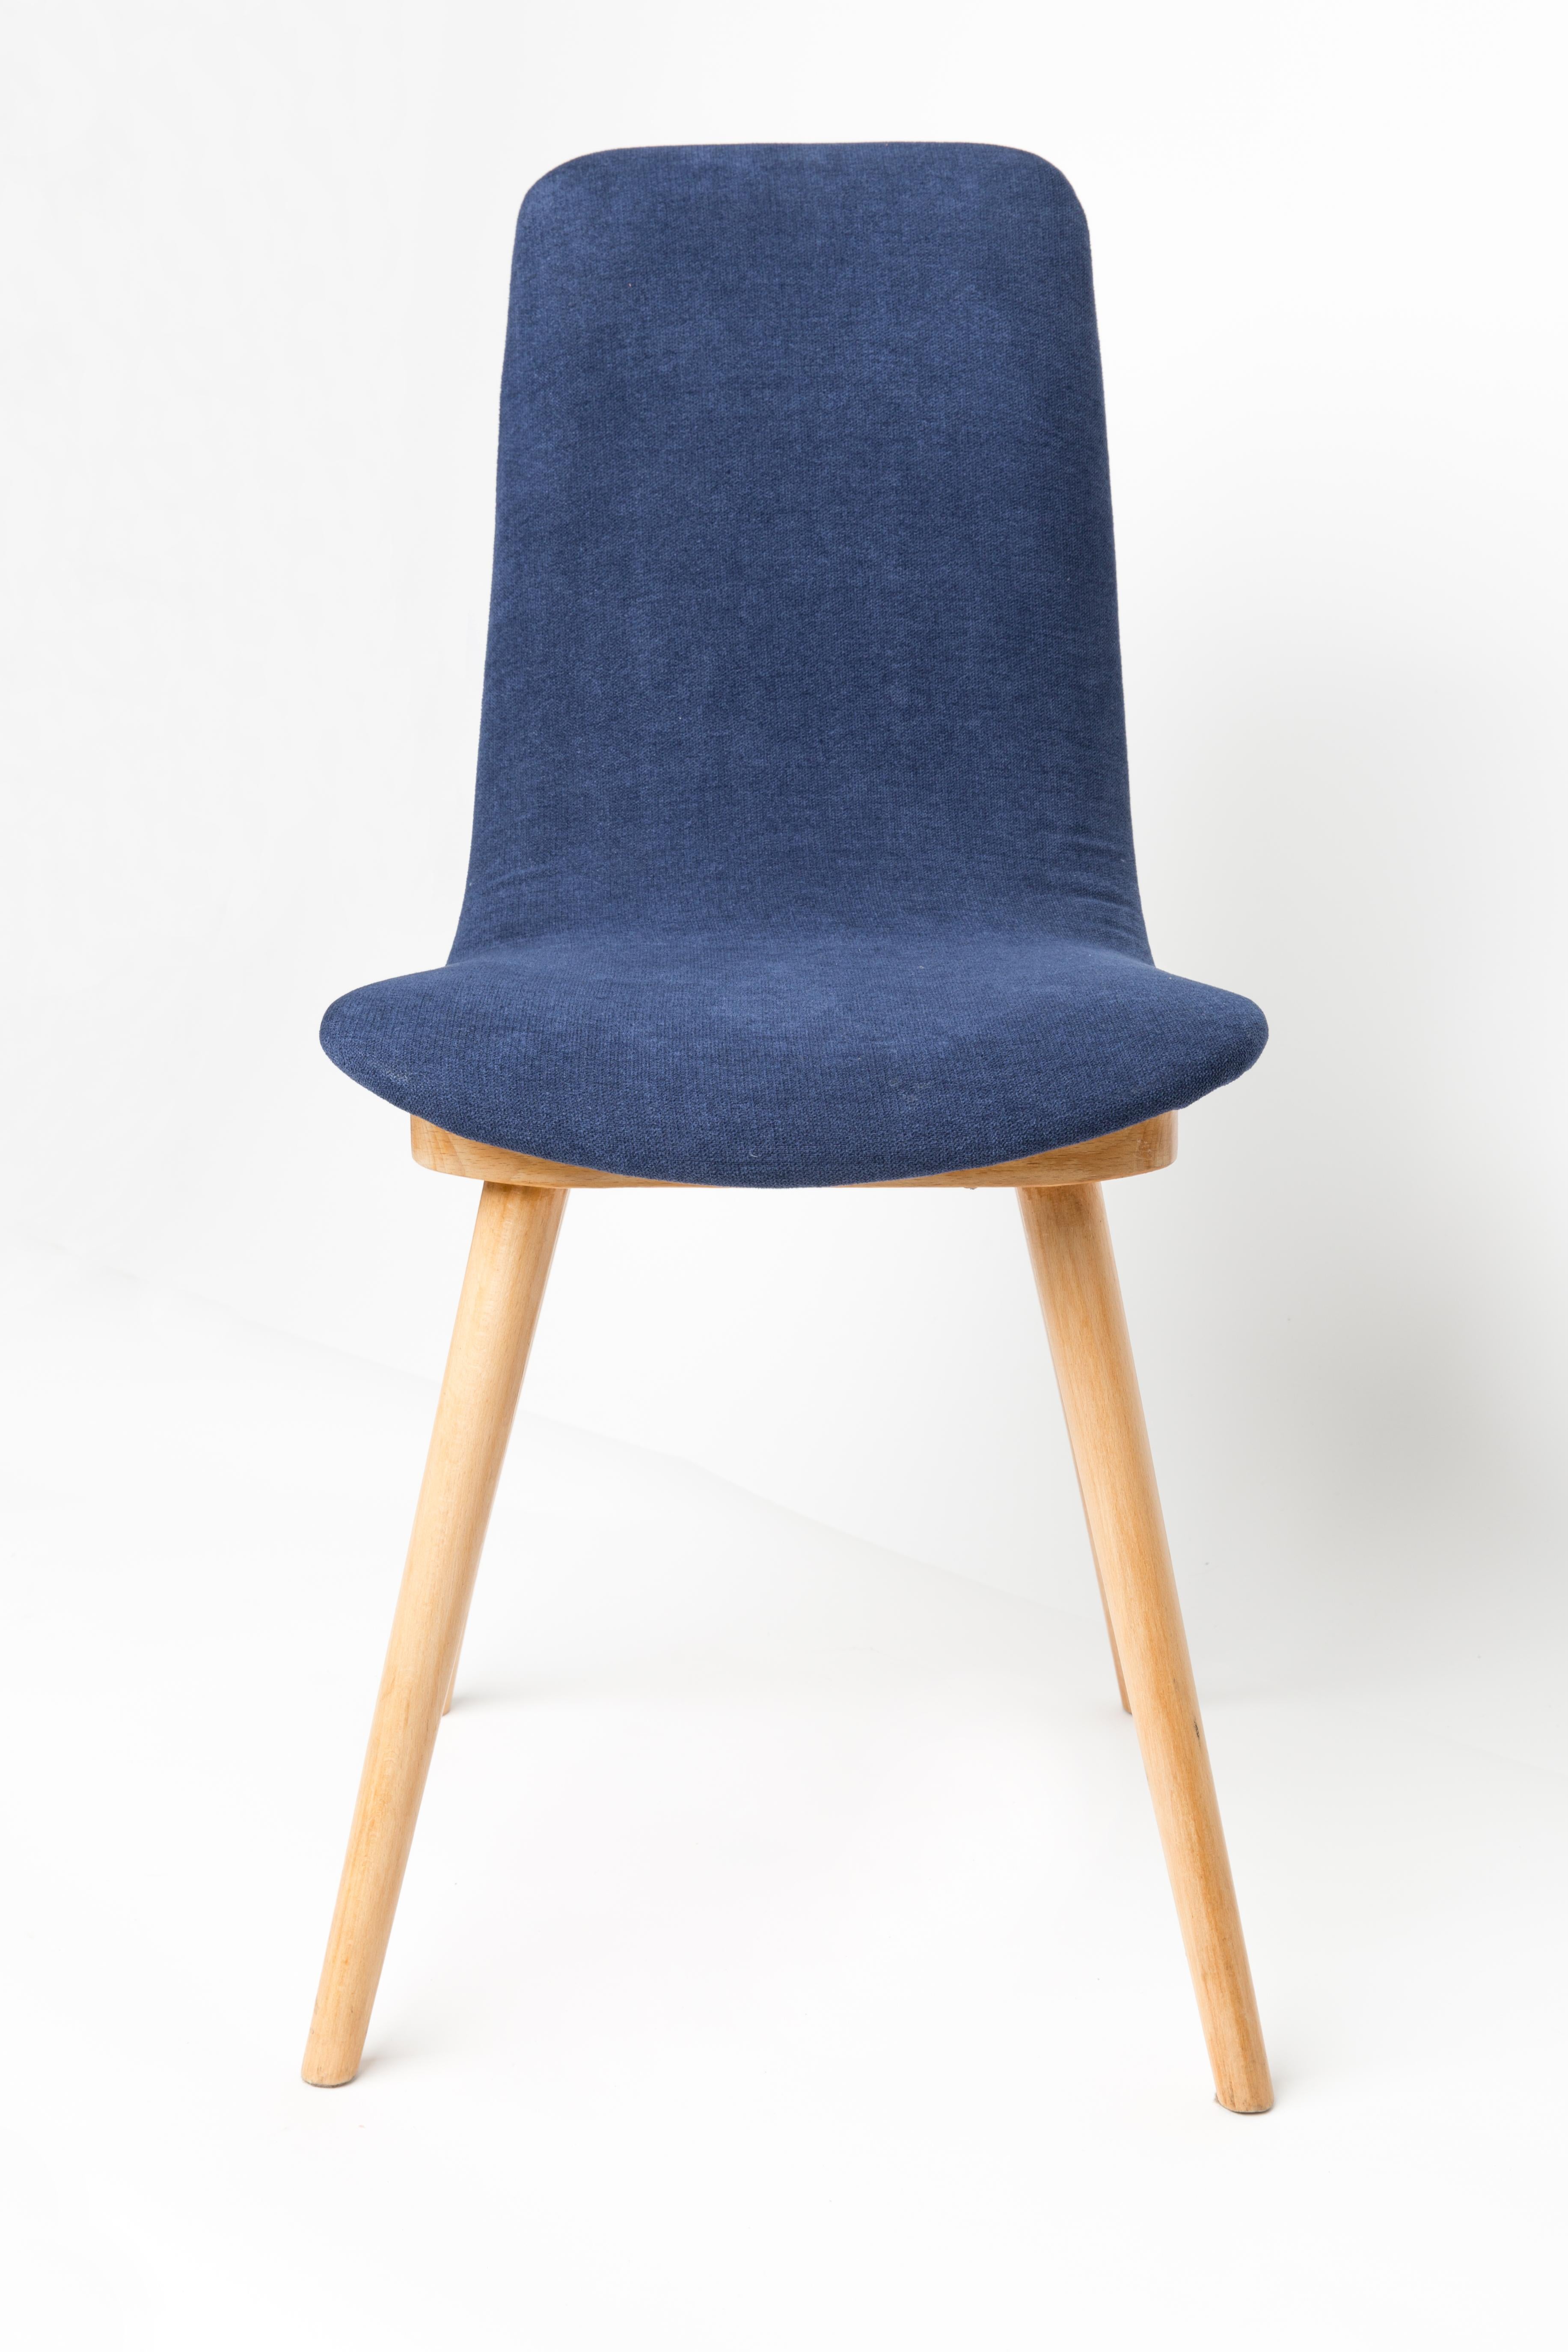 fameg chair price